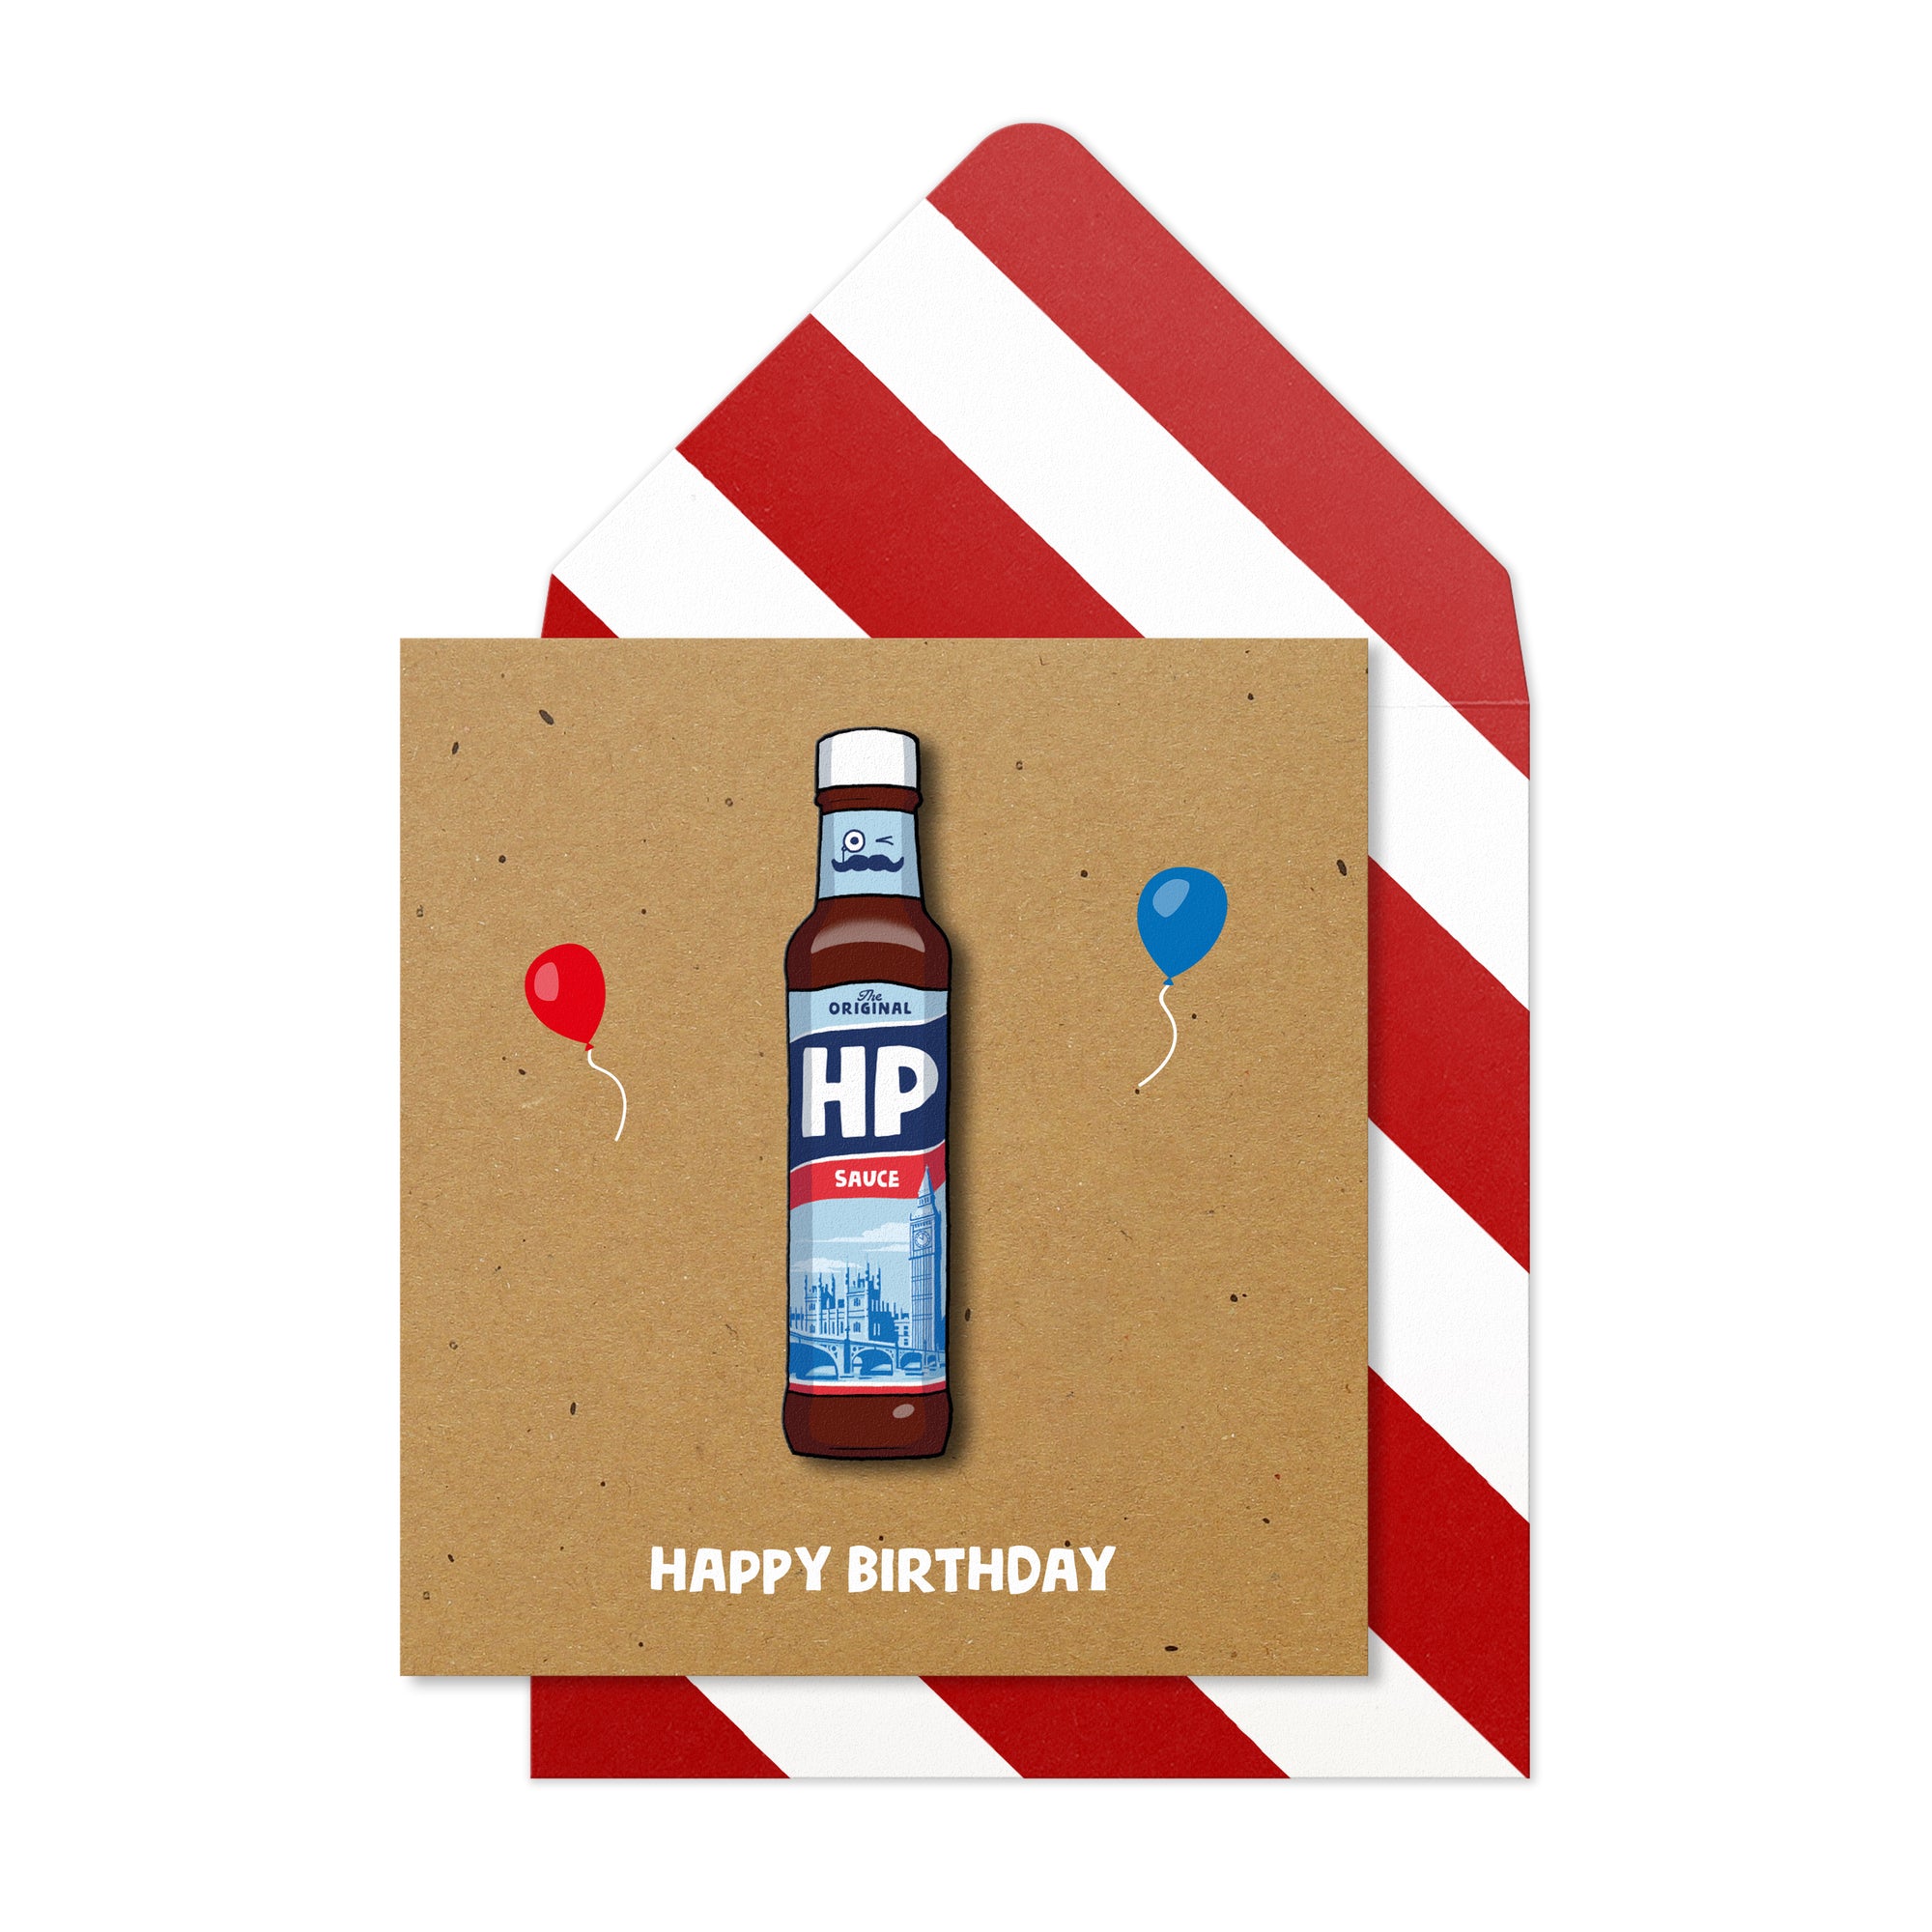 HP Sauce, Happy Birthday Balloons